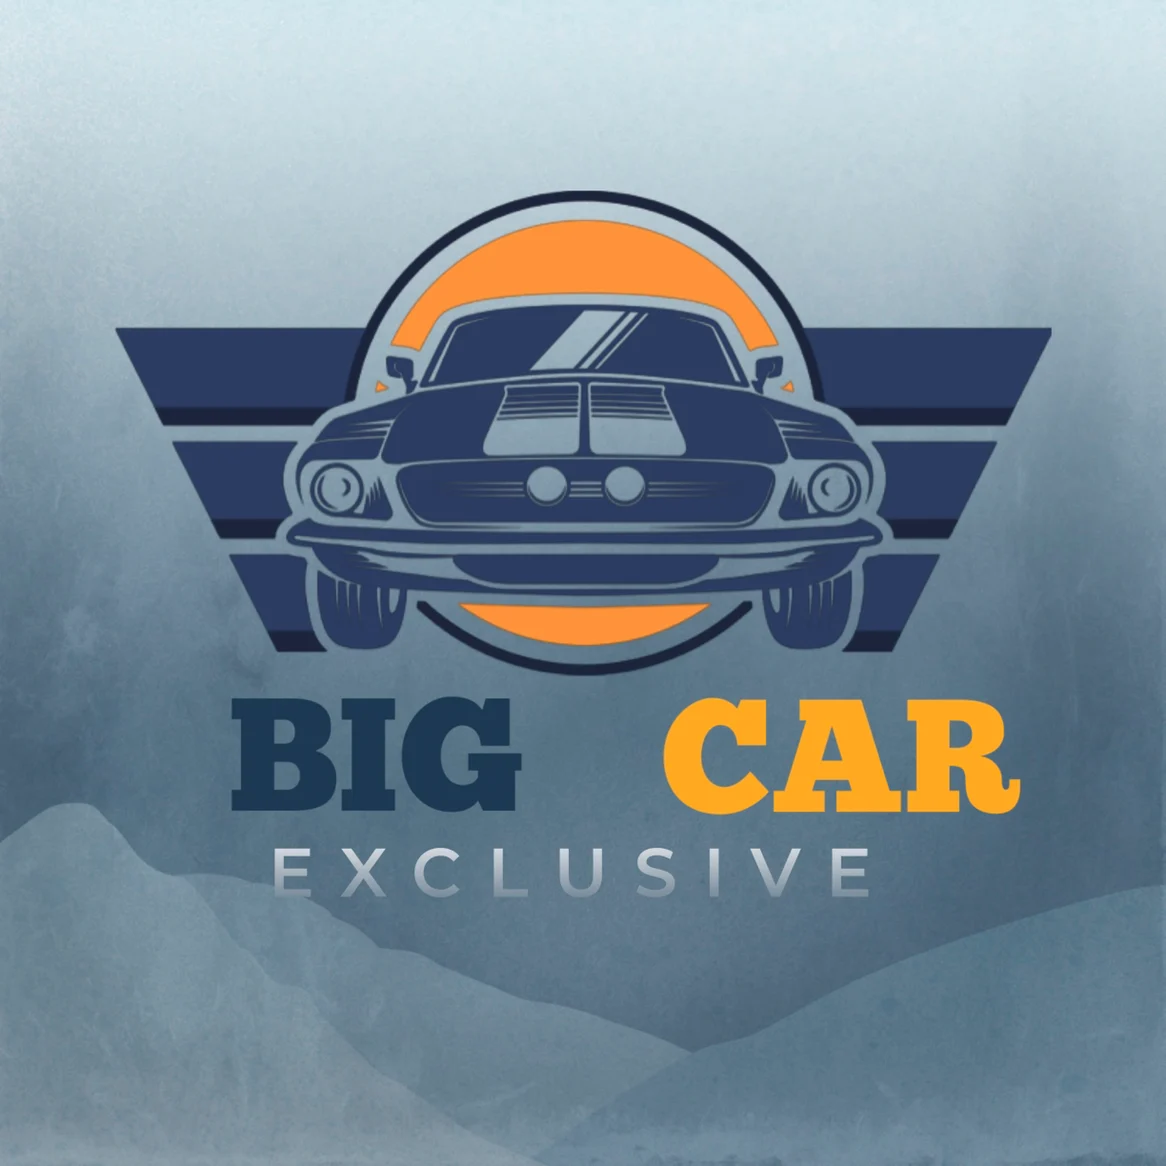 Big Car Exclusive